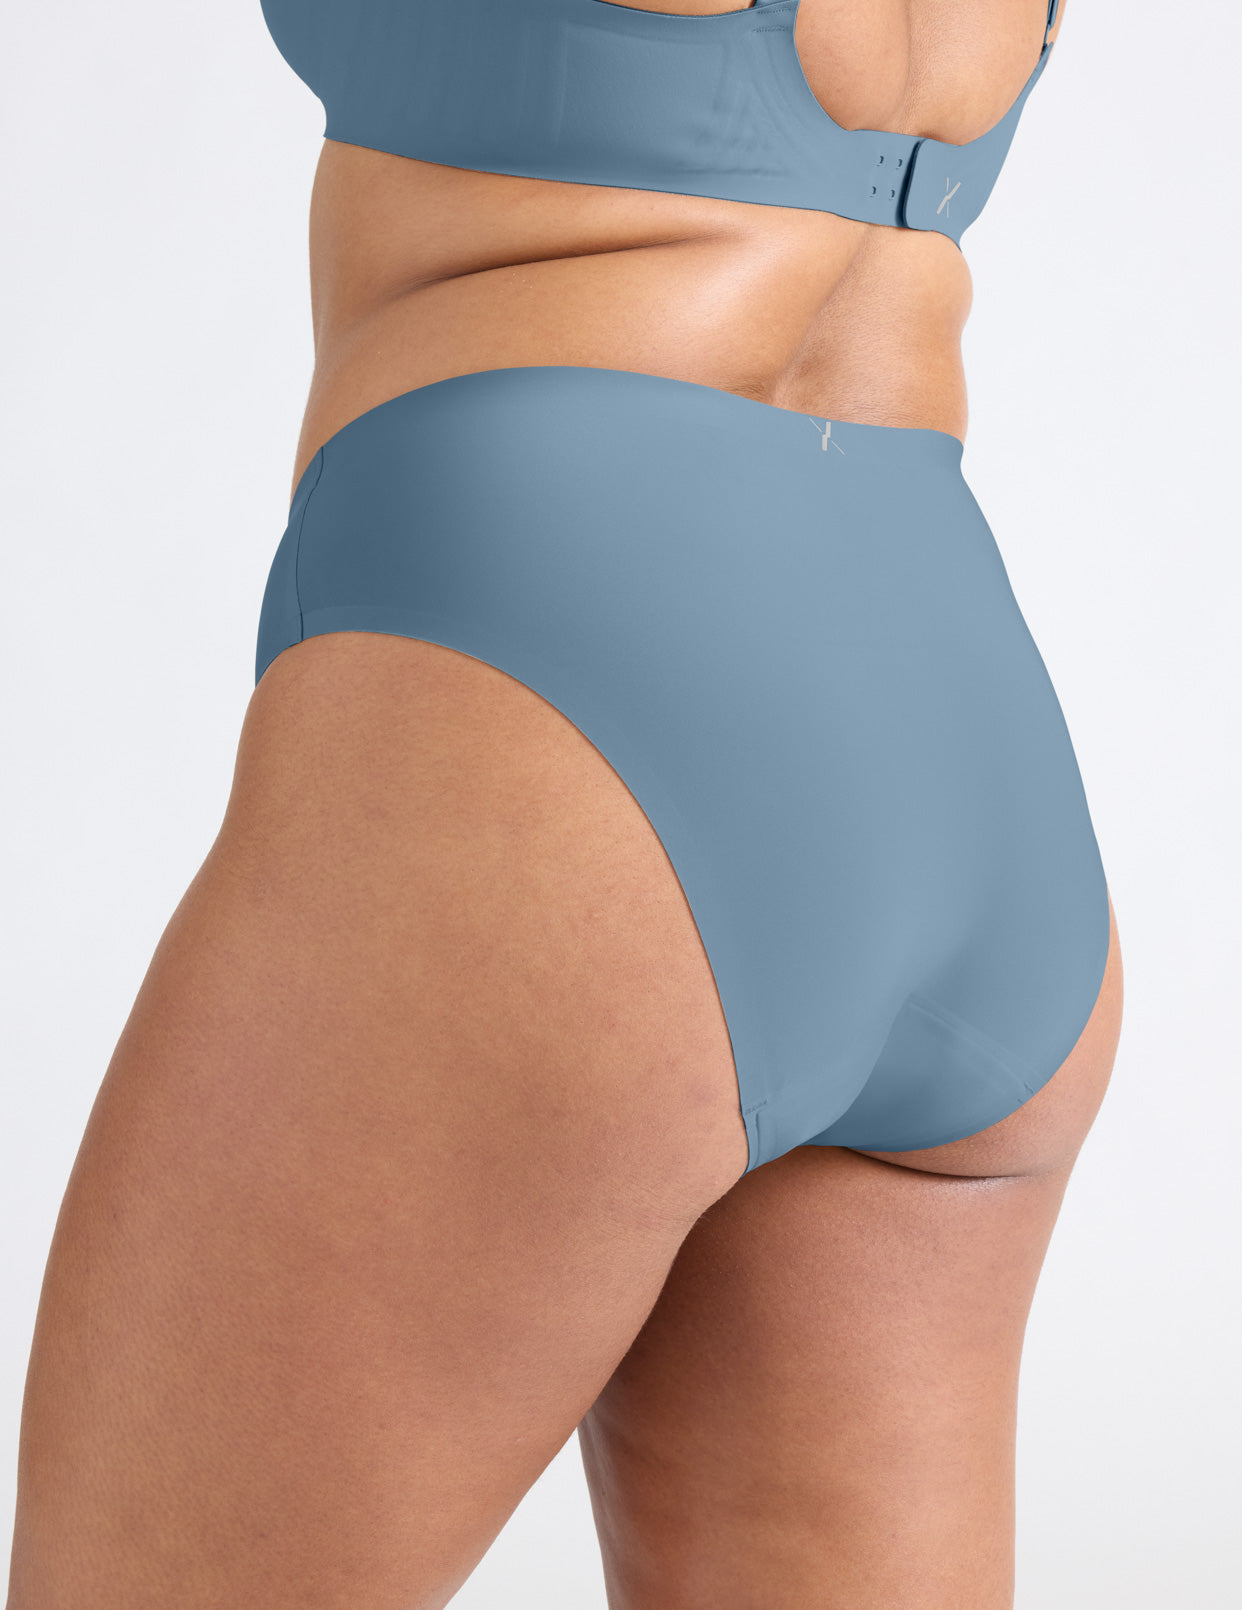 Modal women's briefs high waist pee proof panties plus size L-XXXL